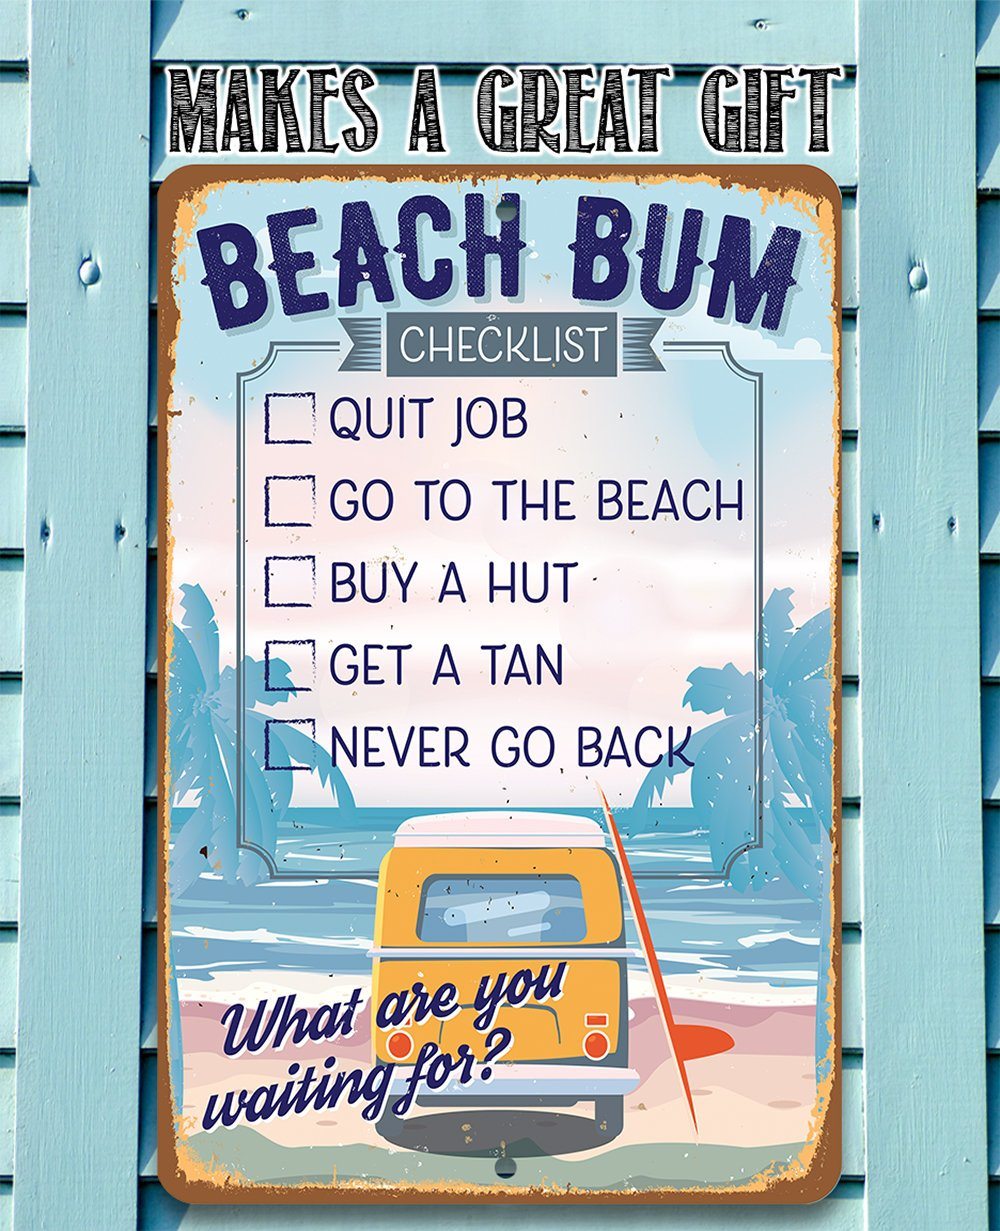 Beach Bum Checklist - Metal Sign | Lone Star Art.